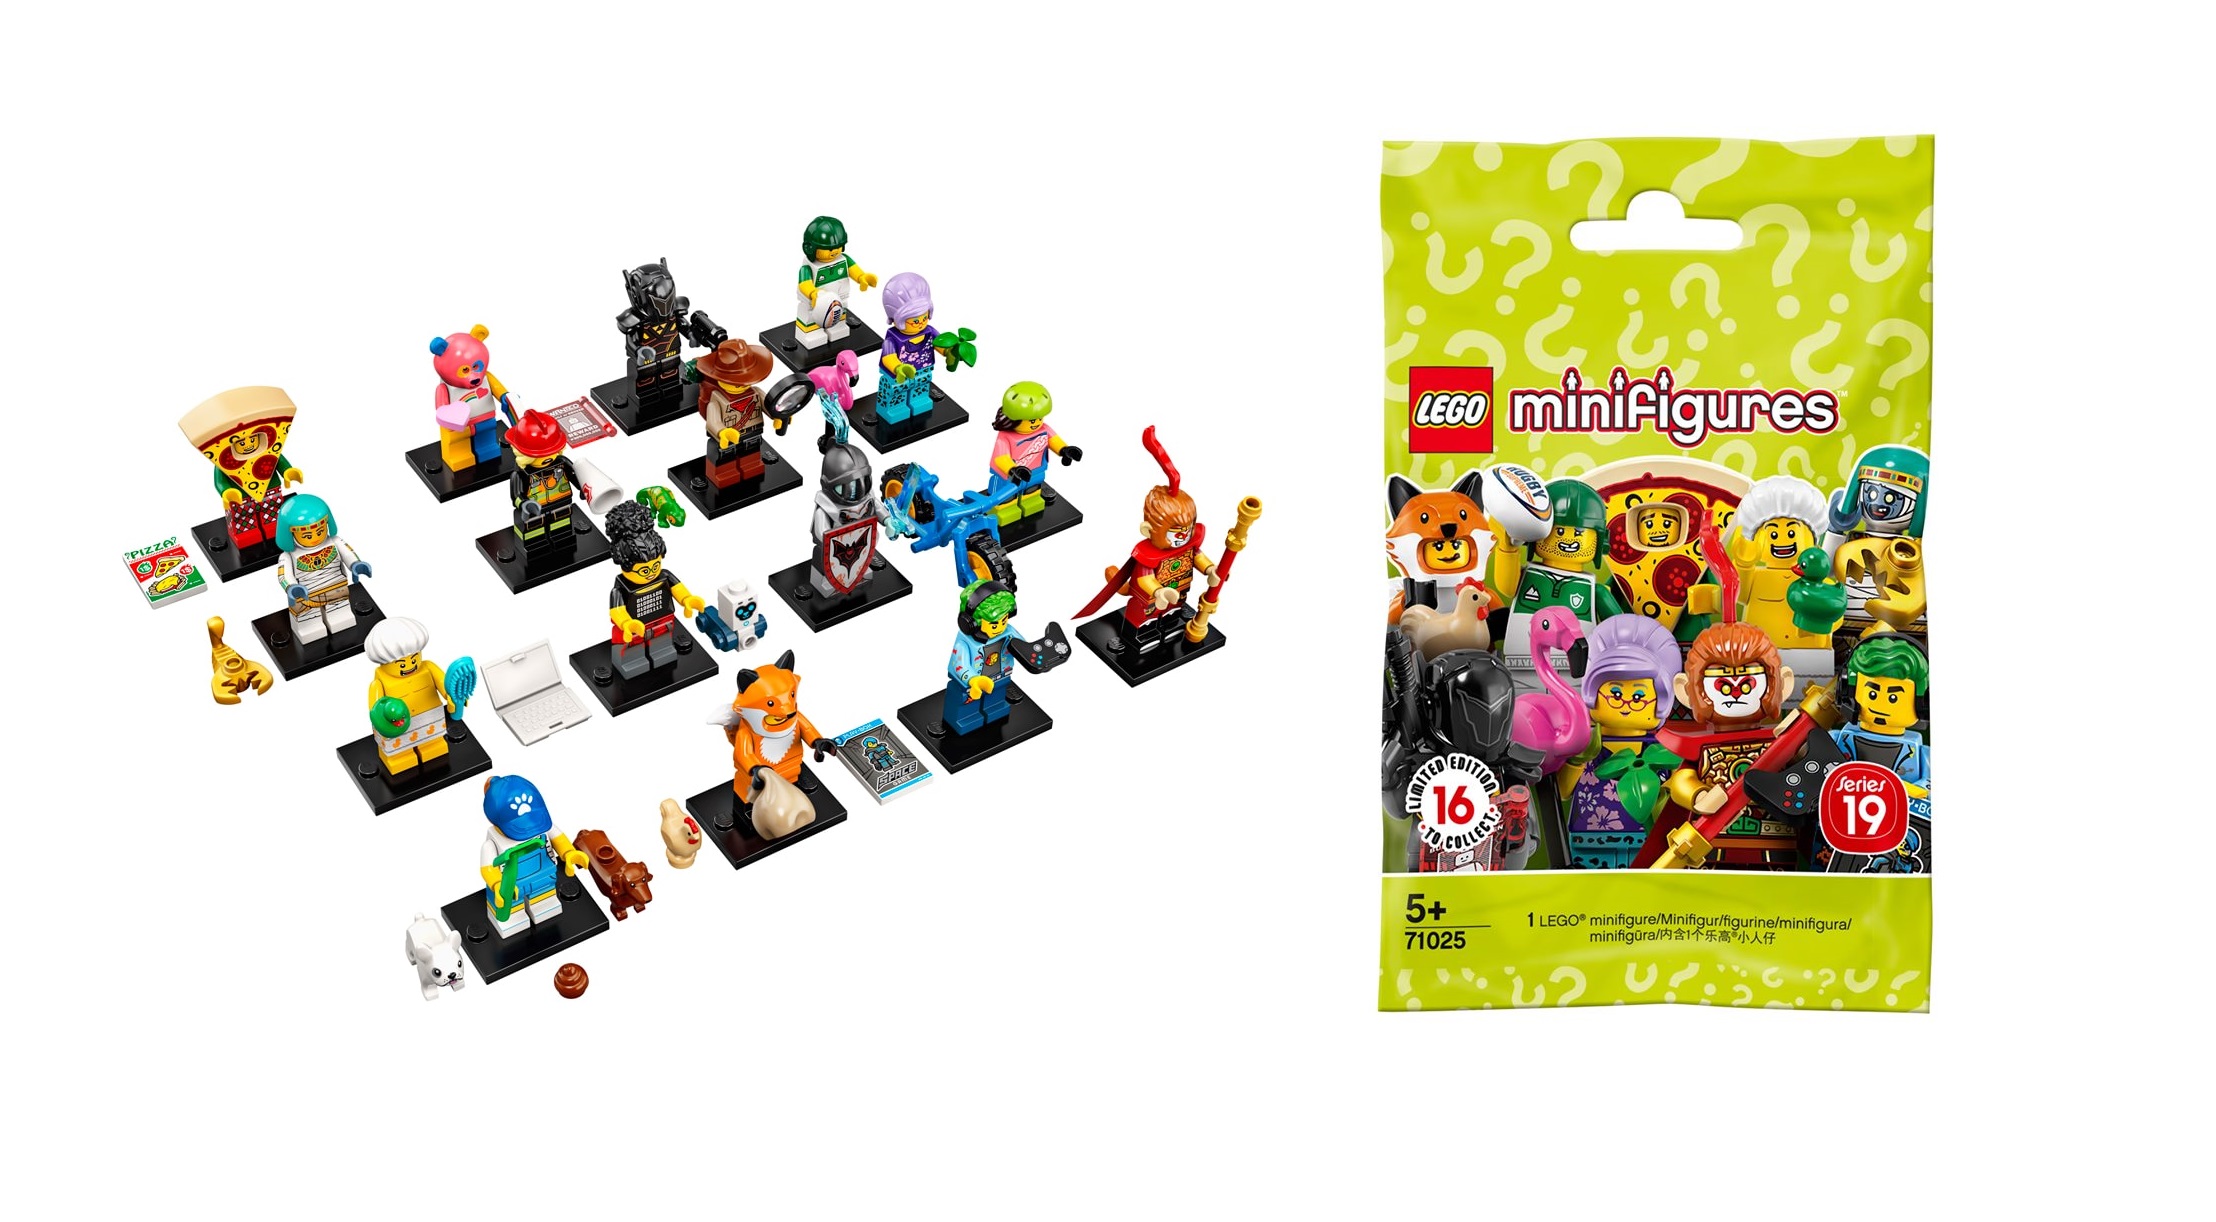 LEGO Minifigures Series 19 revealed 